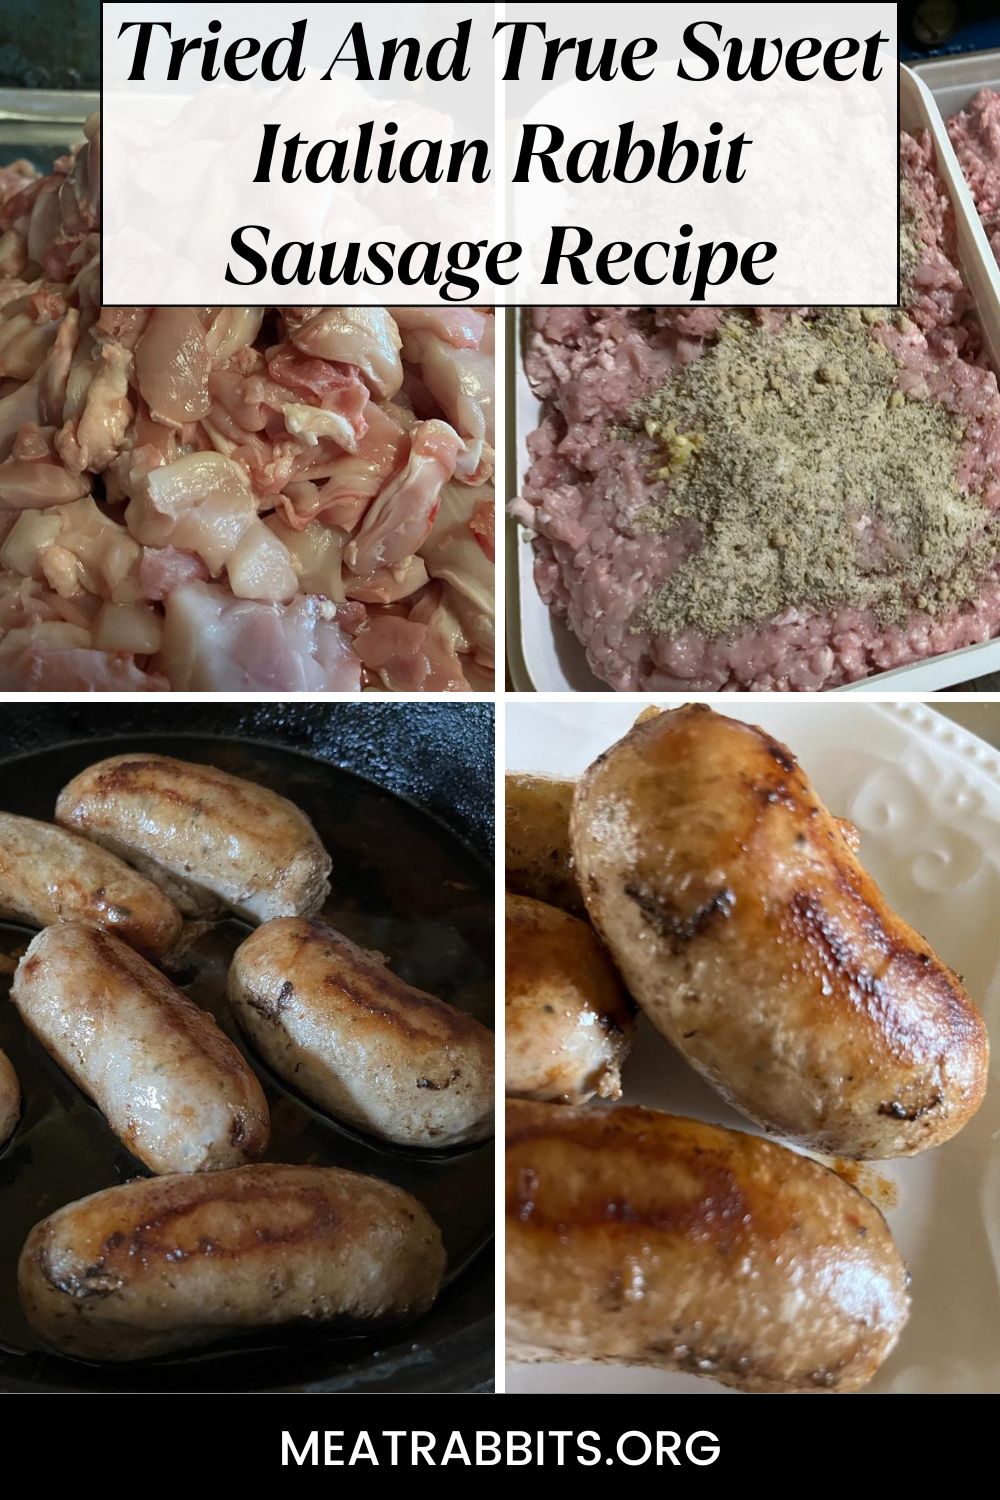 Tried And True Sweet Italian Rabbit Sausage Recipe pinterest image.